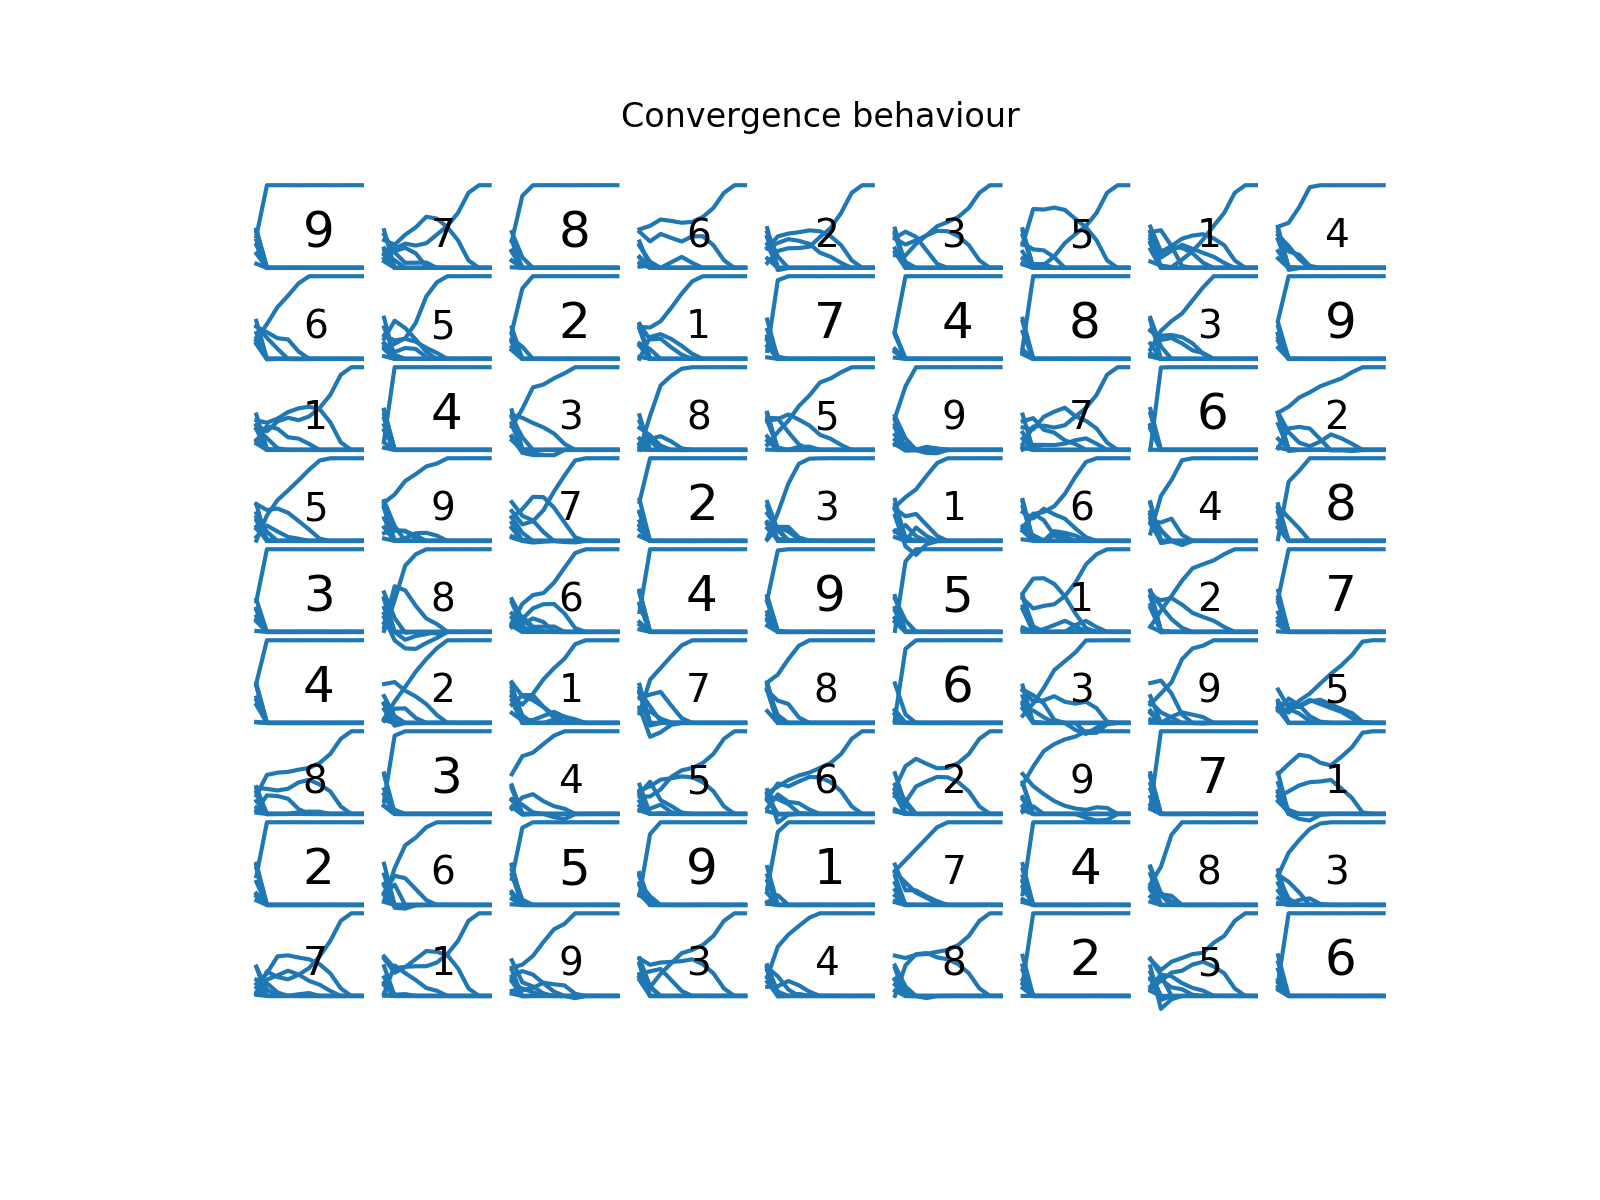 Sudoku convergence plot